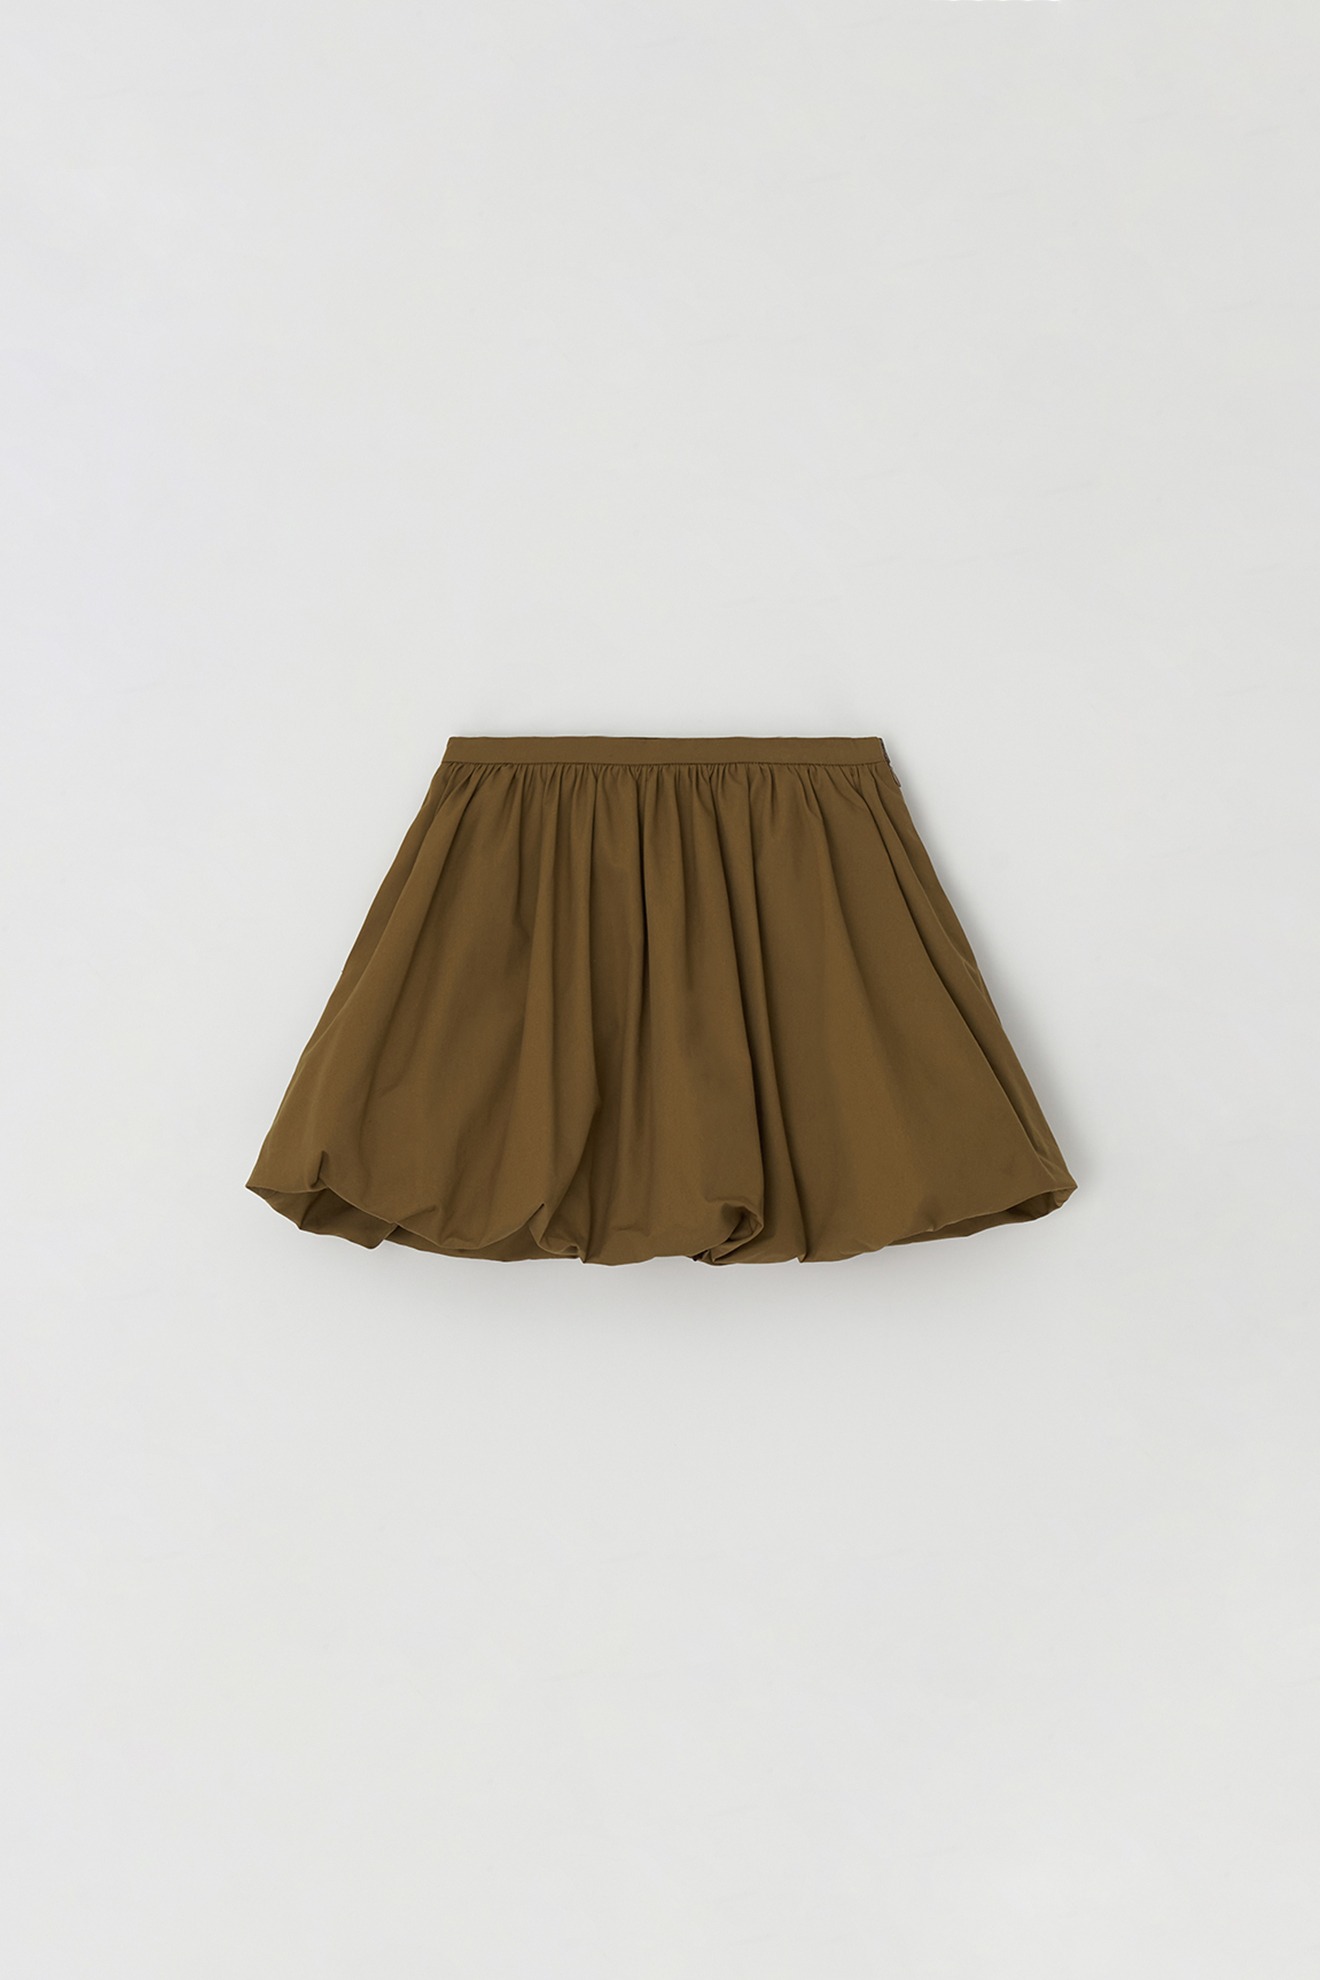 Volume Skirt (brown)